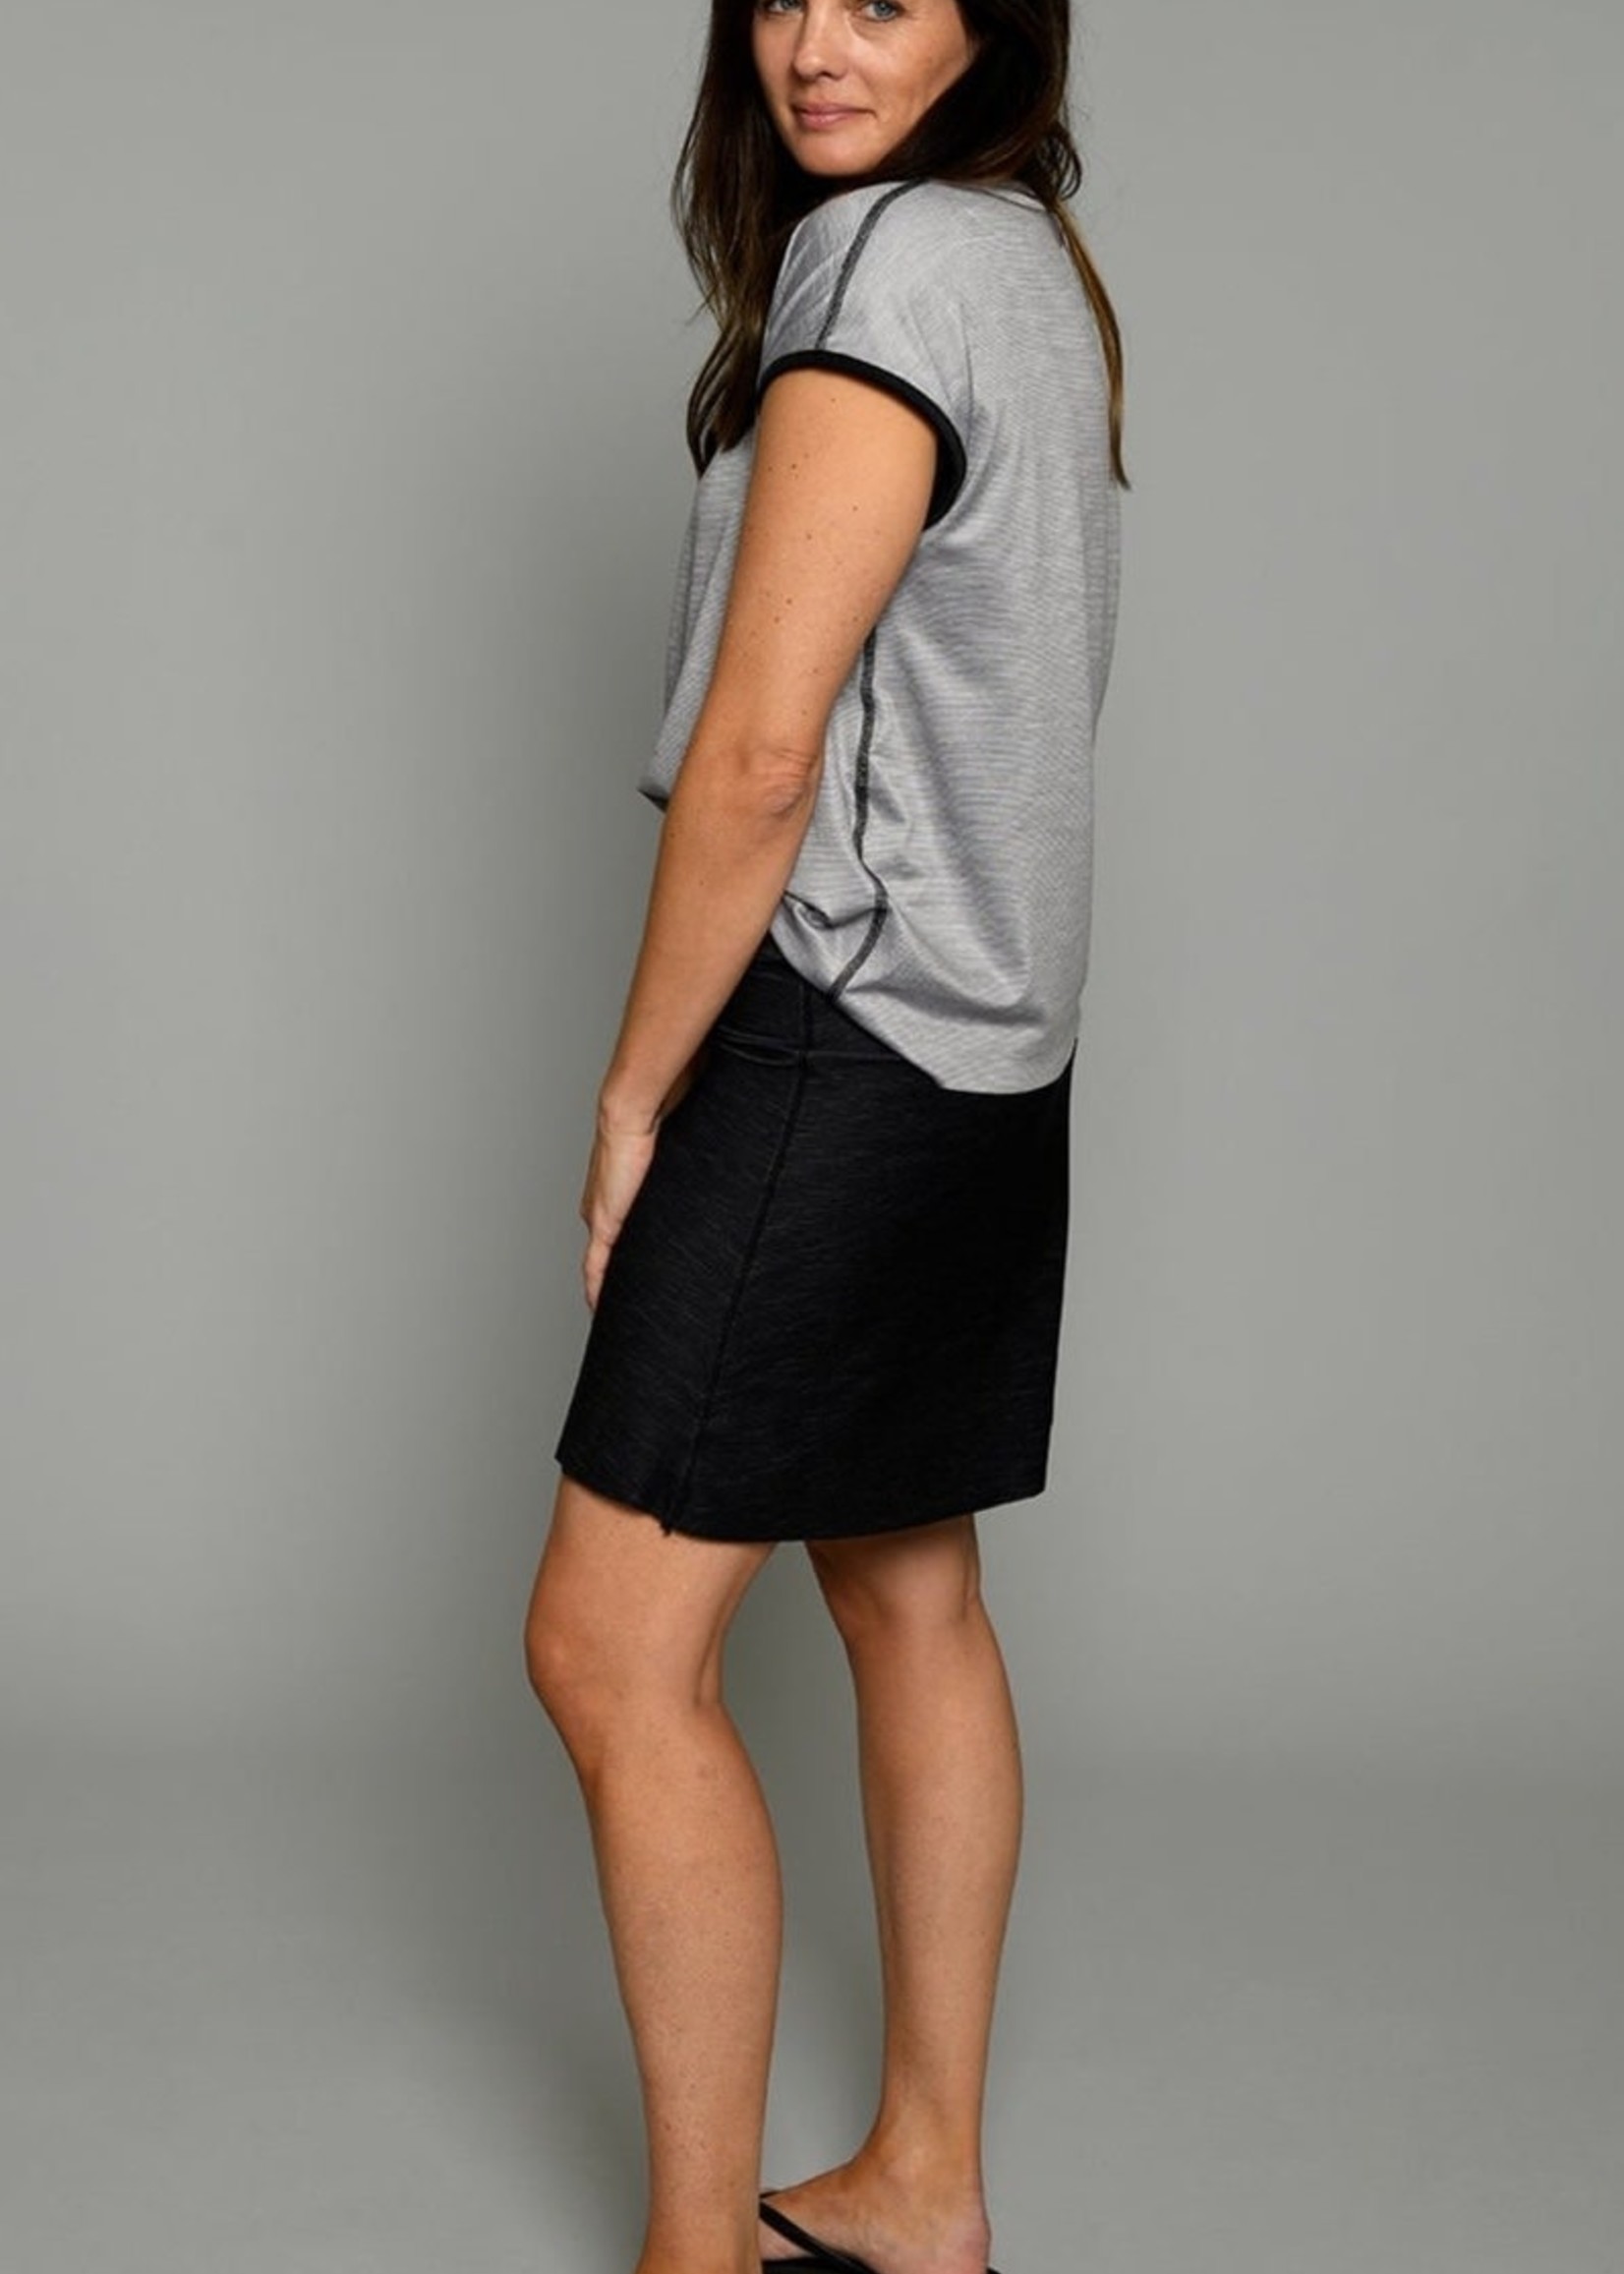 Green 3 Apparel Texture Grey/Texture Black REV Skirt